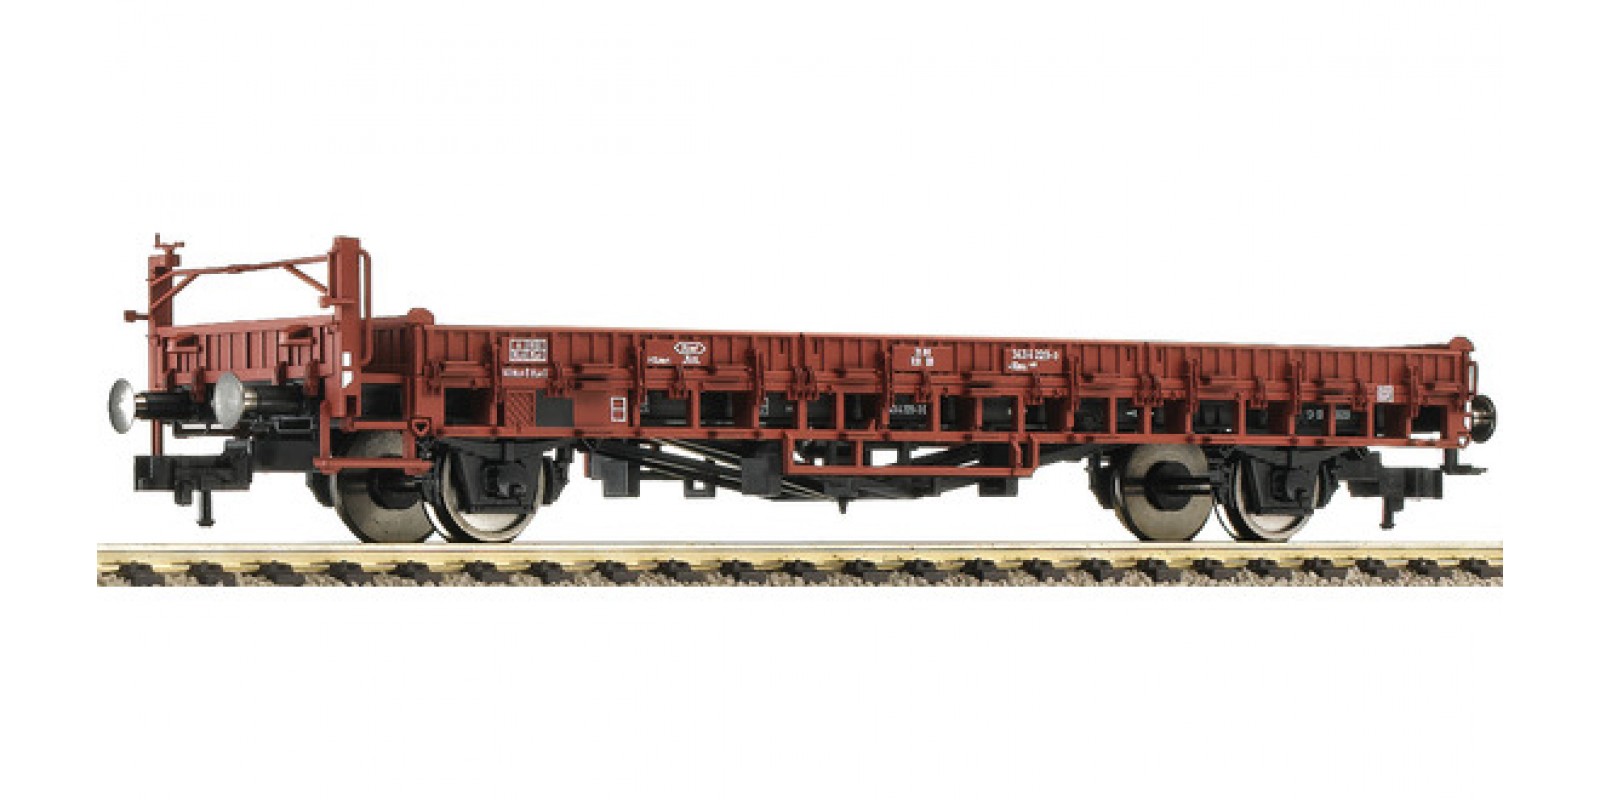 FL525702 - Goods wagon with brakeman‘s platform type Klms 440, DB